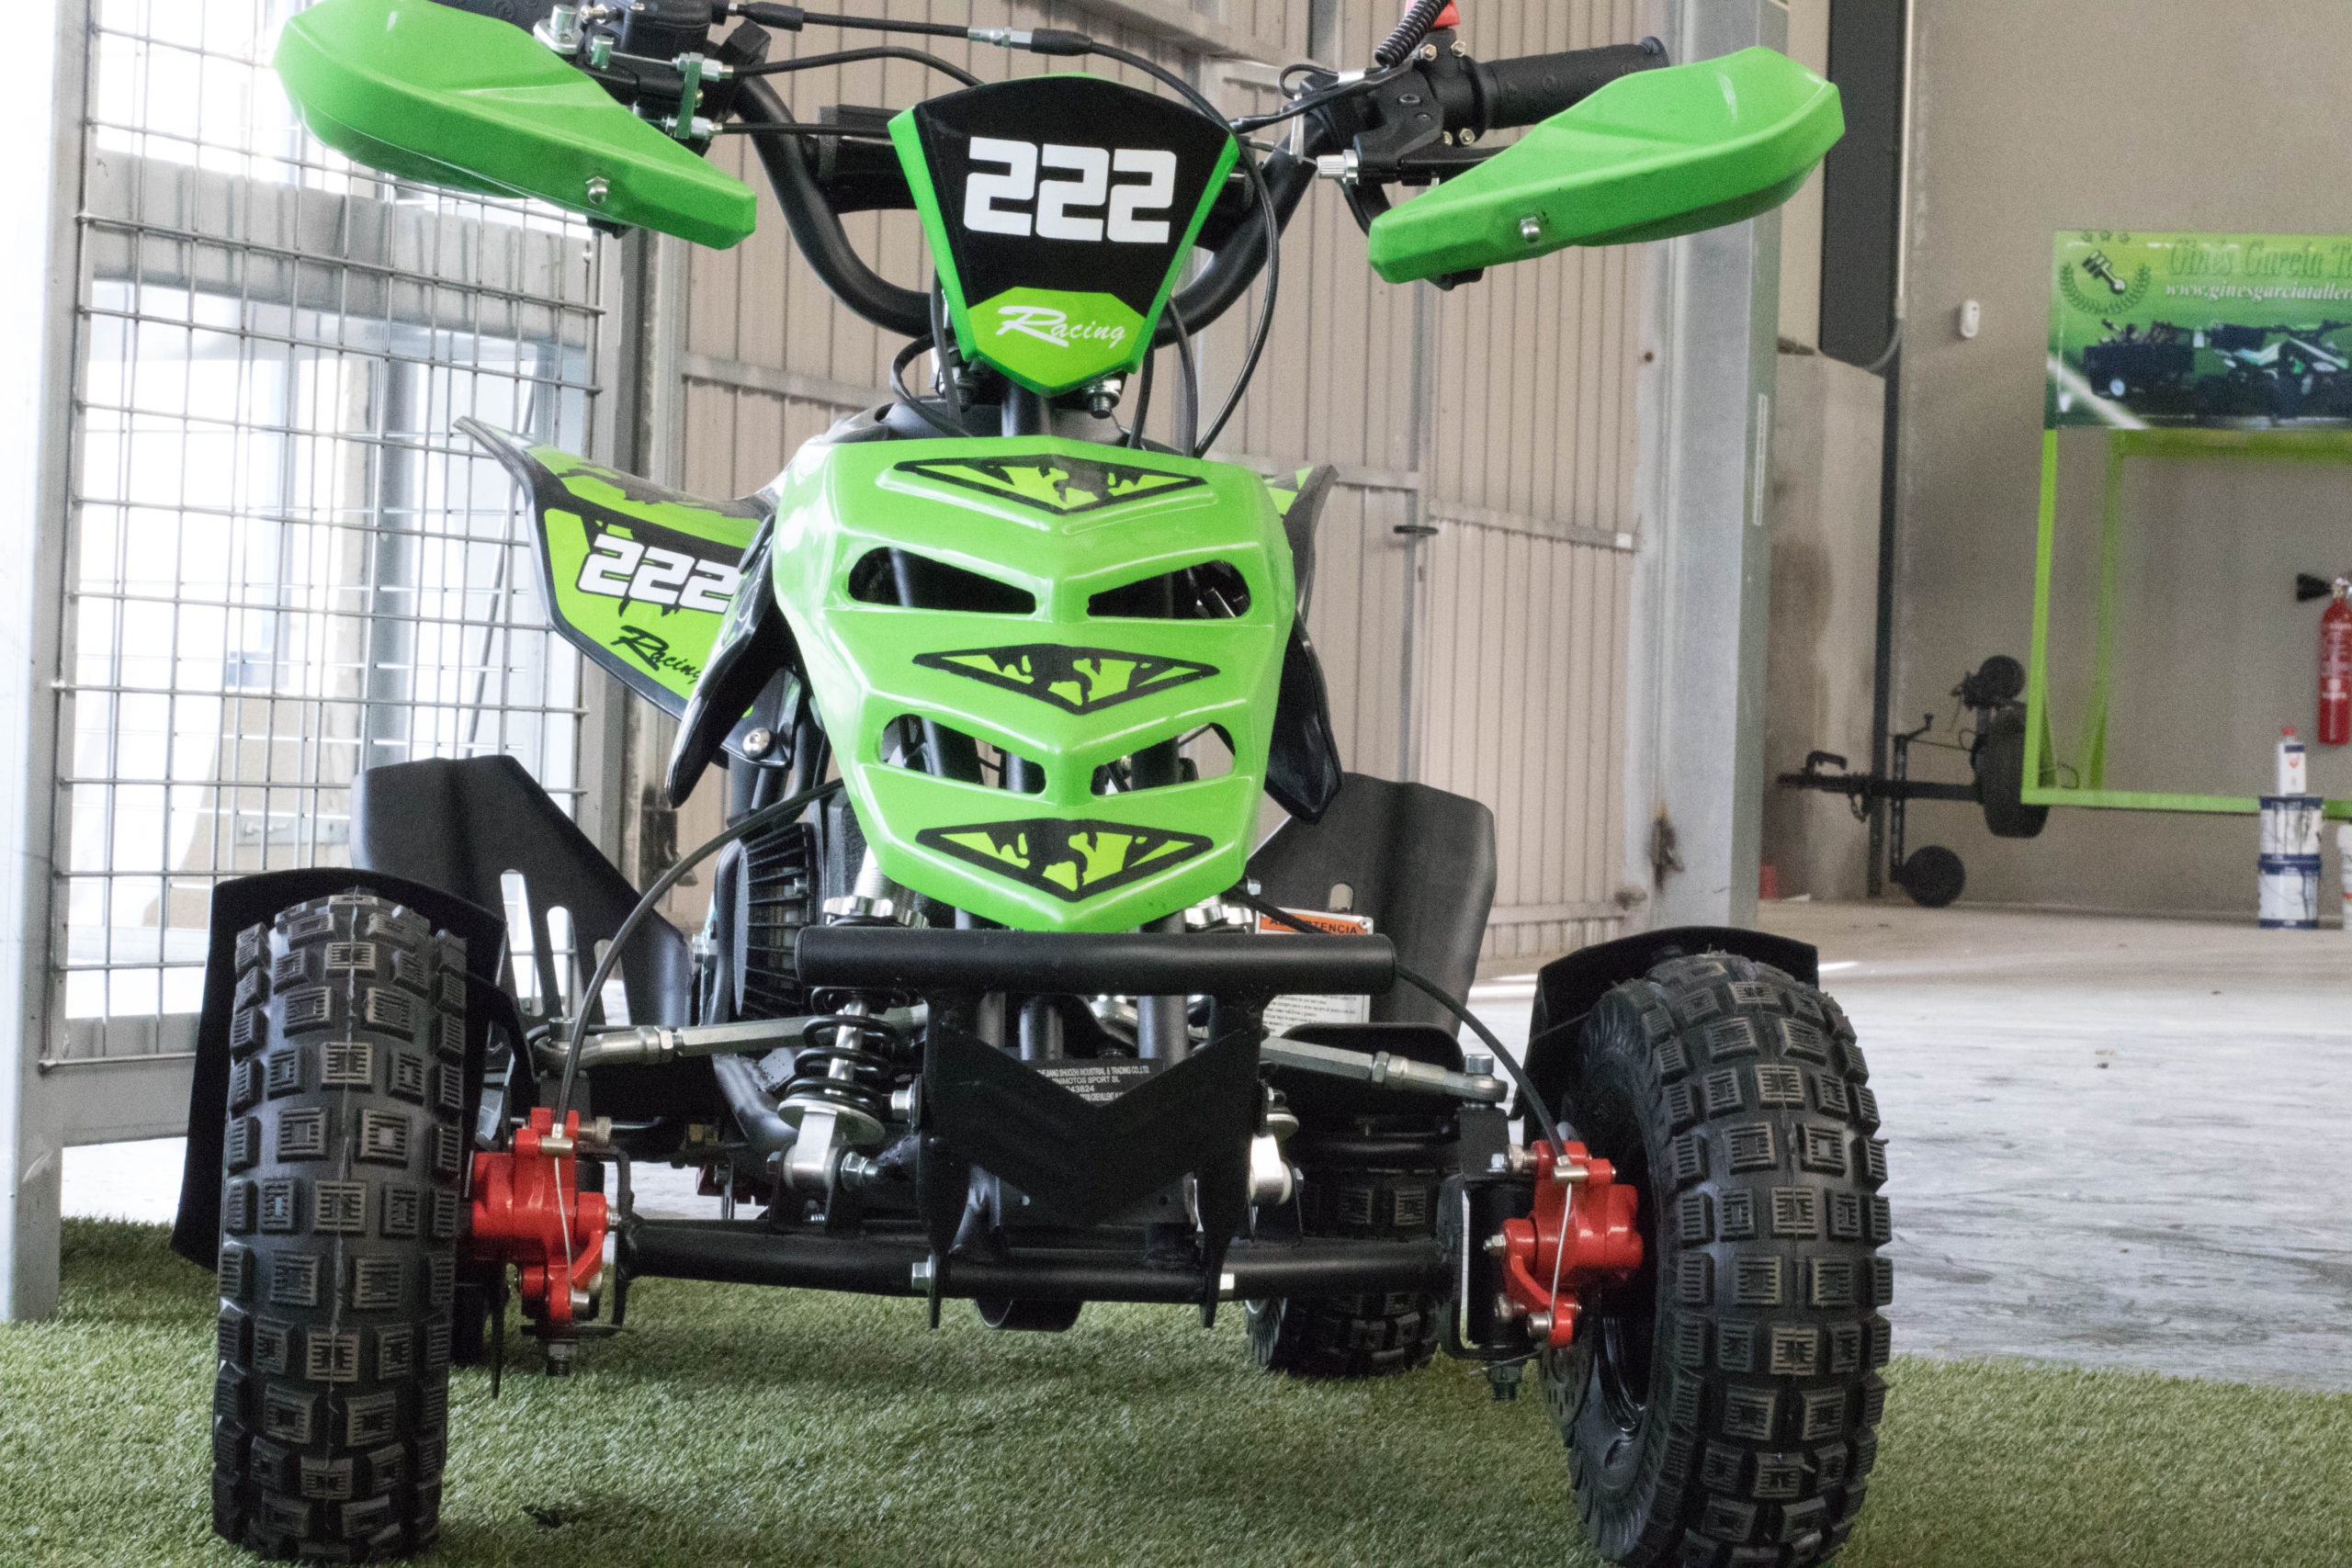 Mini quad 49cc ATV STAR - Quad para niños - Minimotos de iniciación